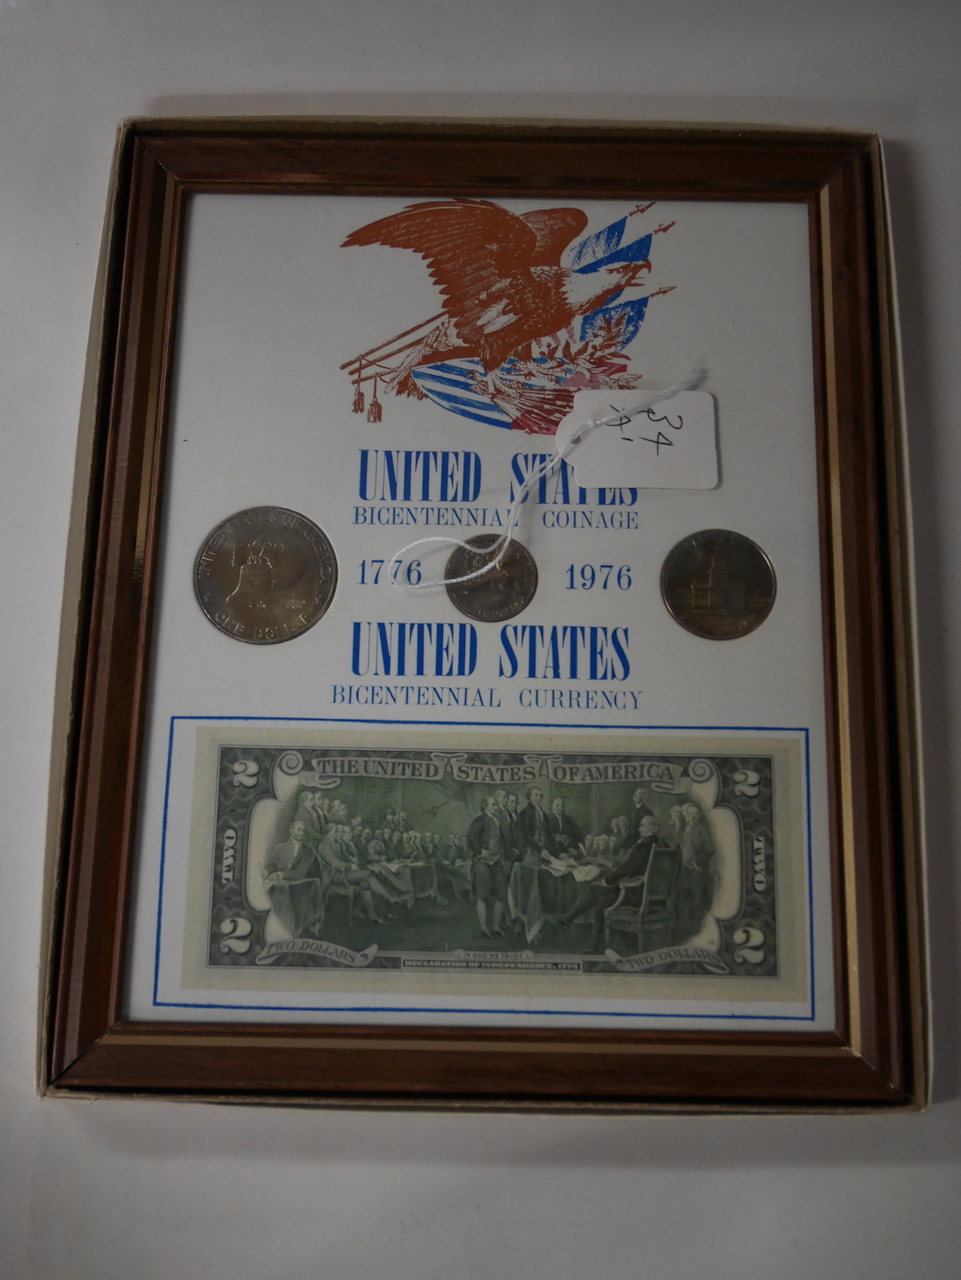 U.S. Bicentennial coinage